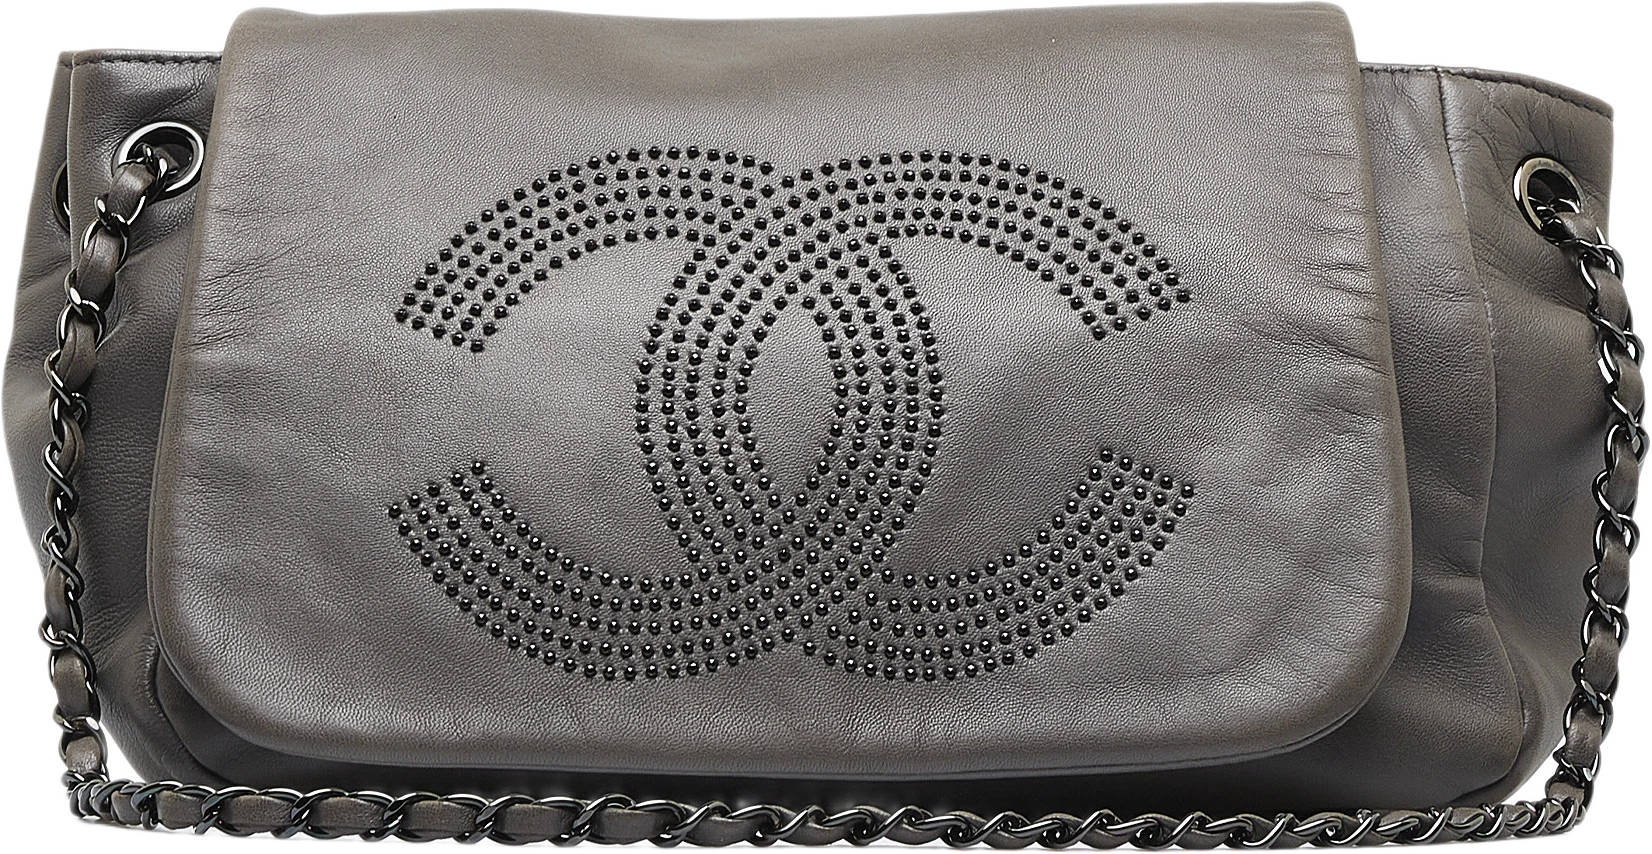 Chanel Accordion Cc Flap Bag